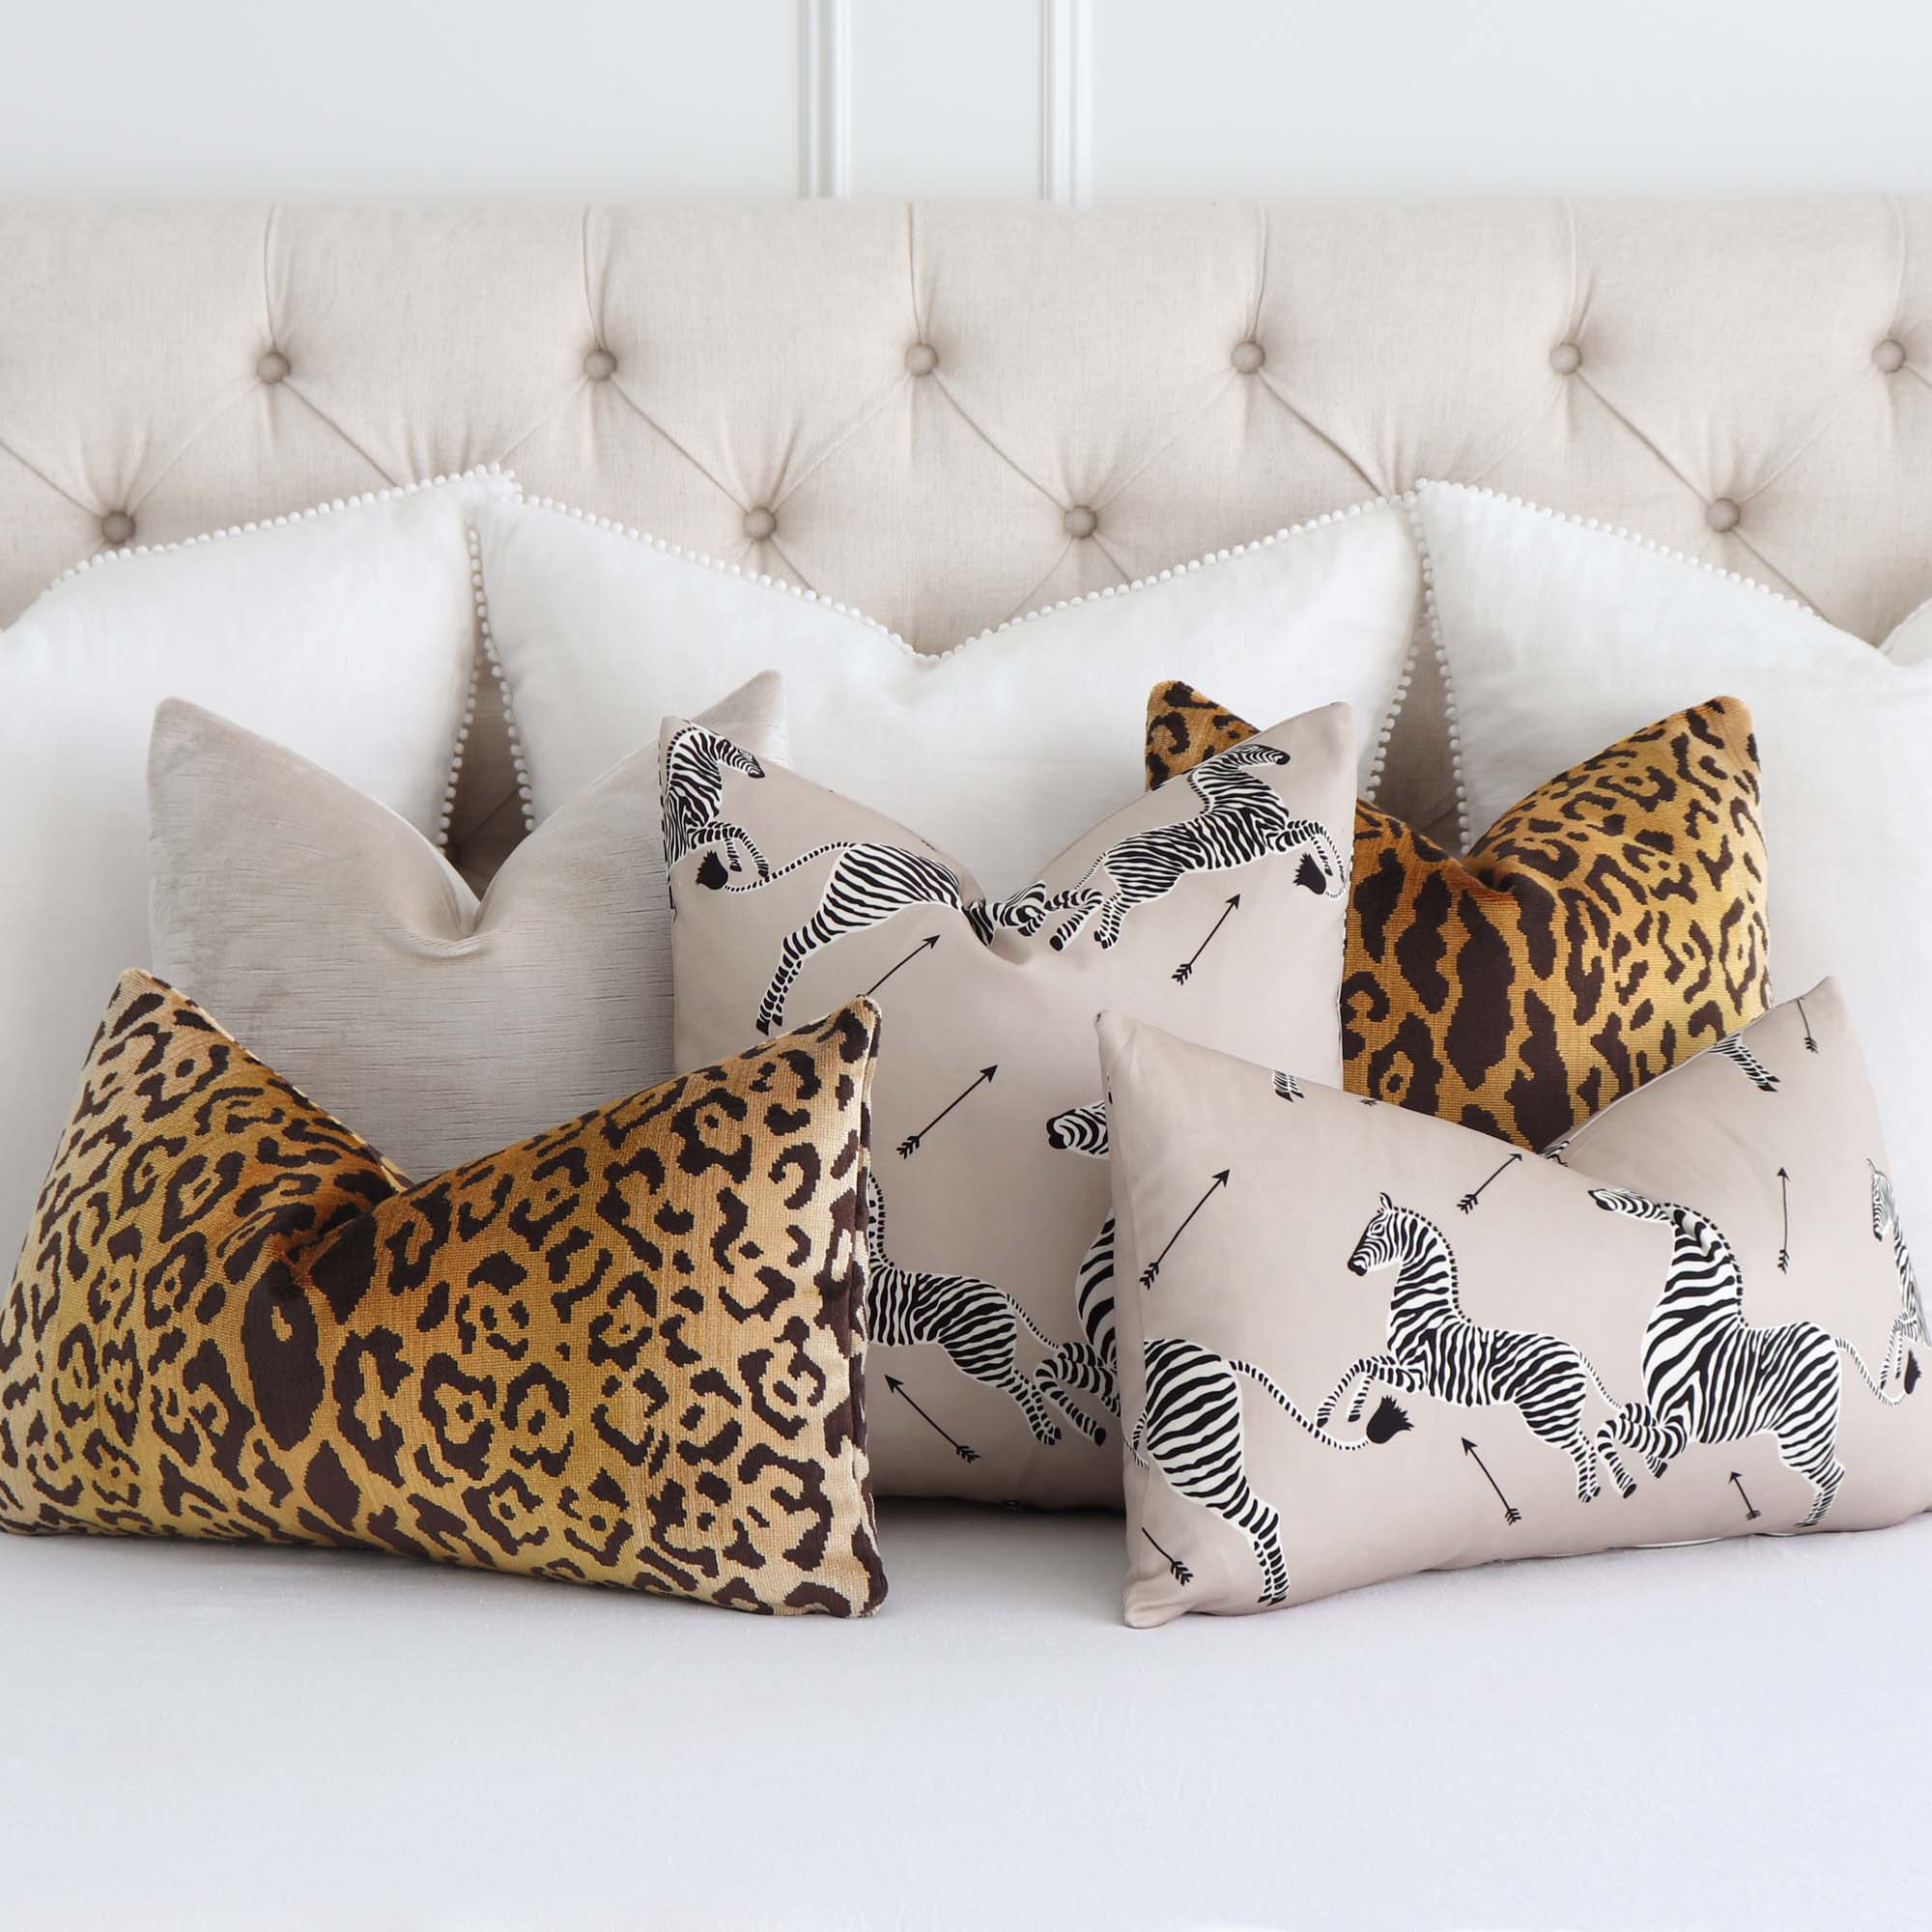 Scalamandre Zebras Petite Sand Designer Animal Print Throw Pillow Cover in Pillow Mix with Coordinating Throw Pillows